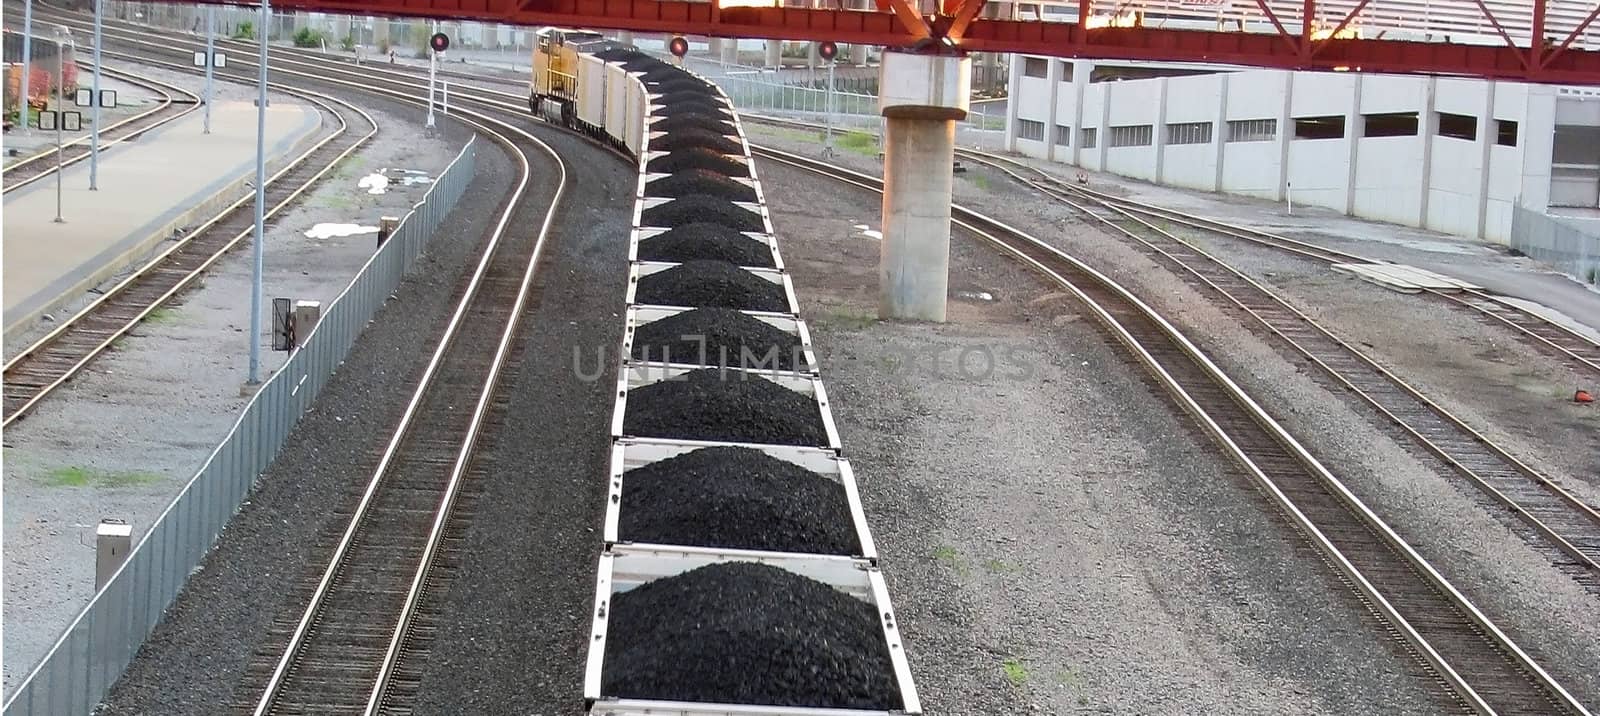 Coal Train by bellafotosolo